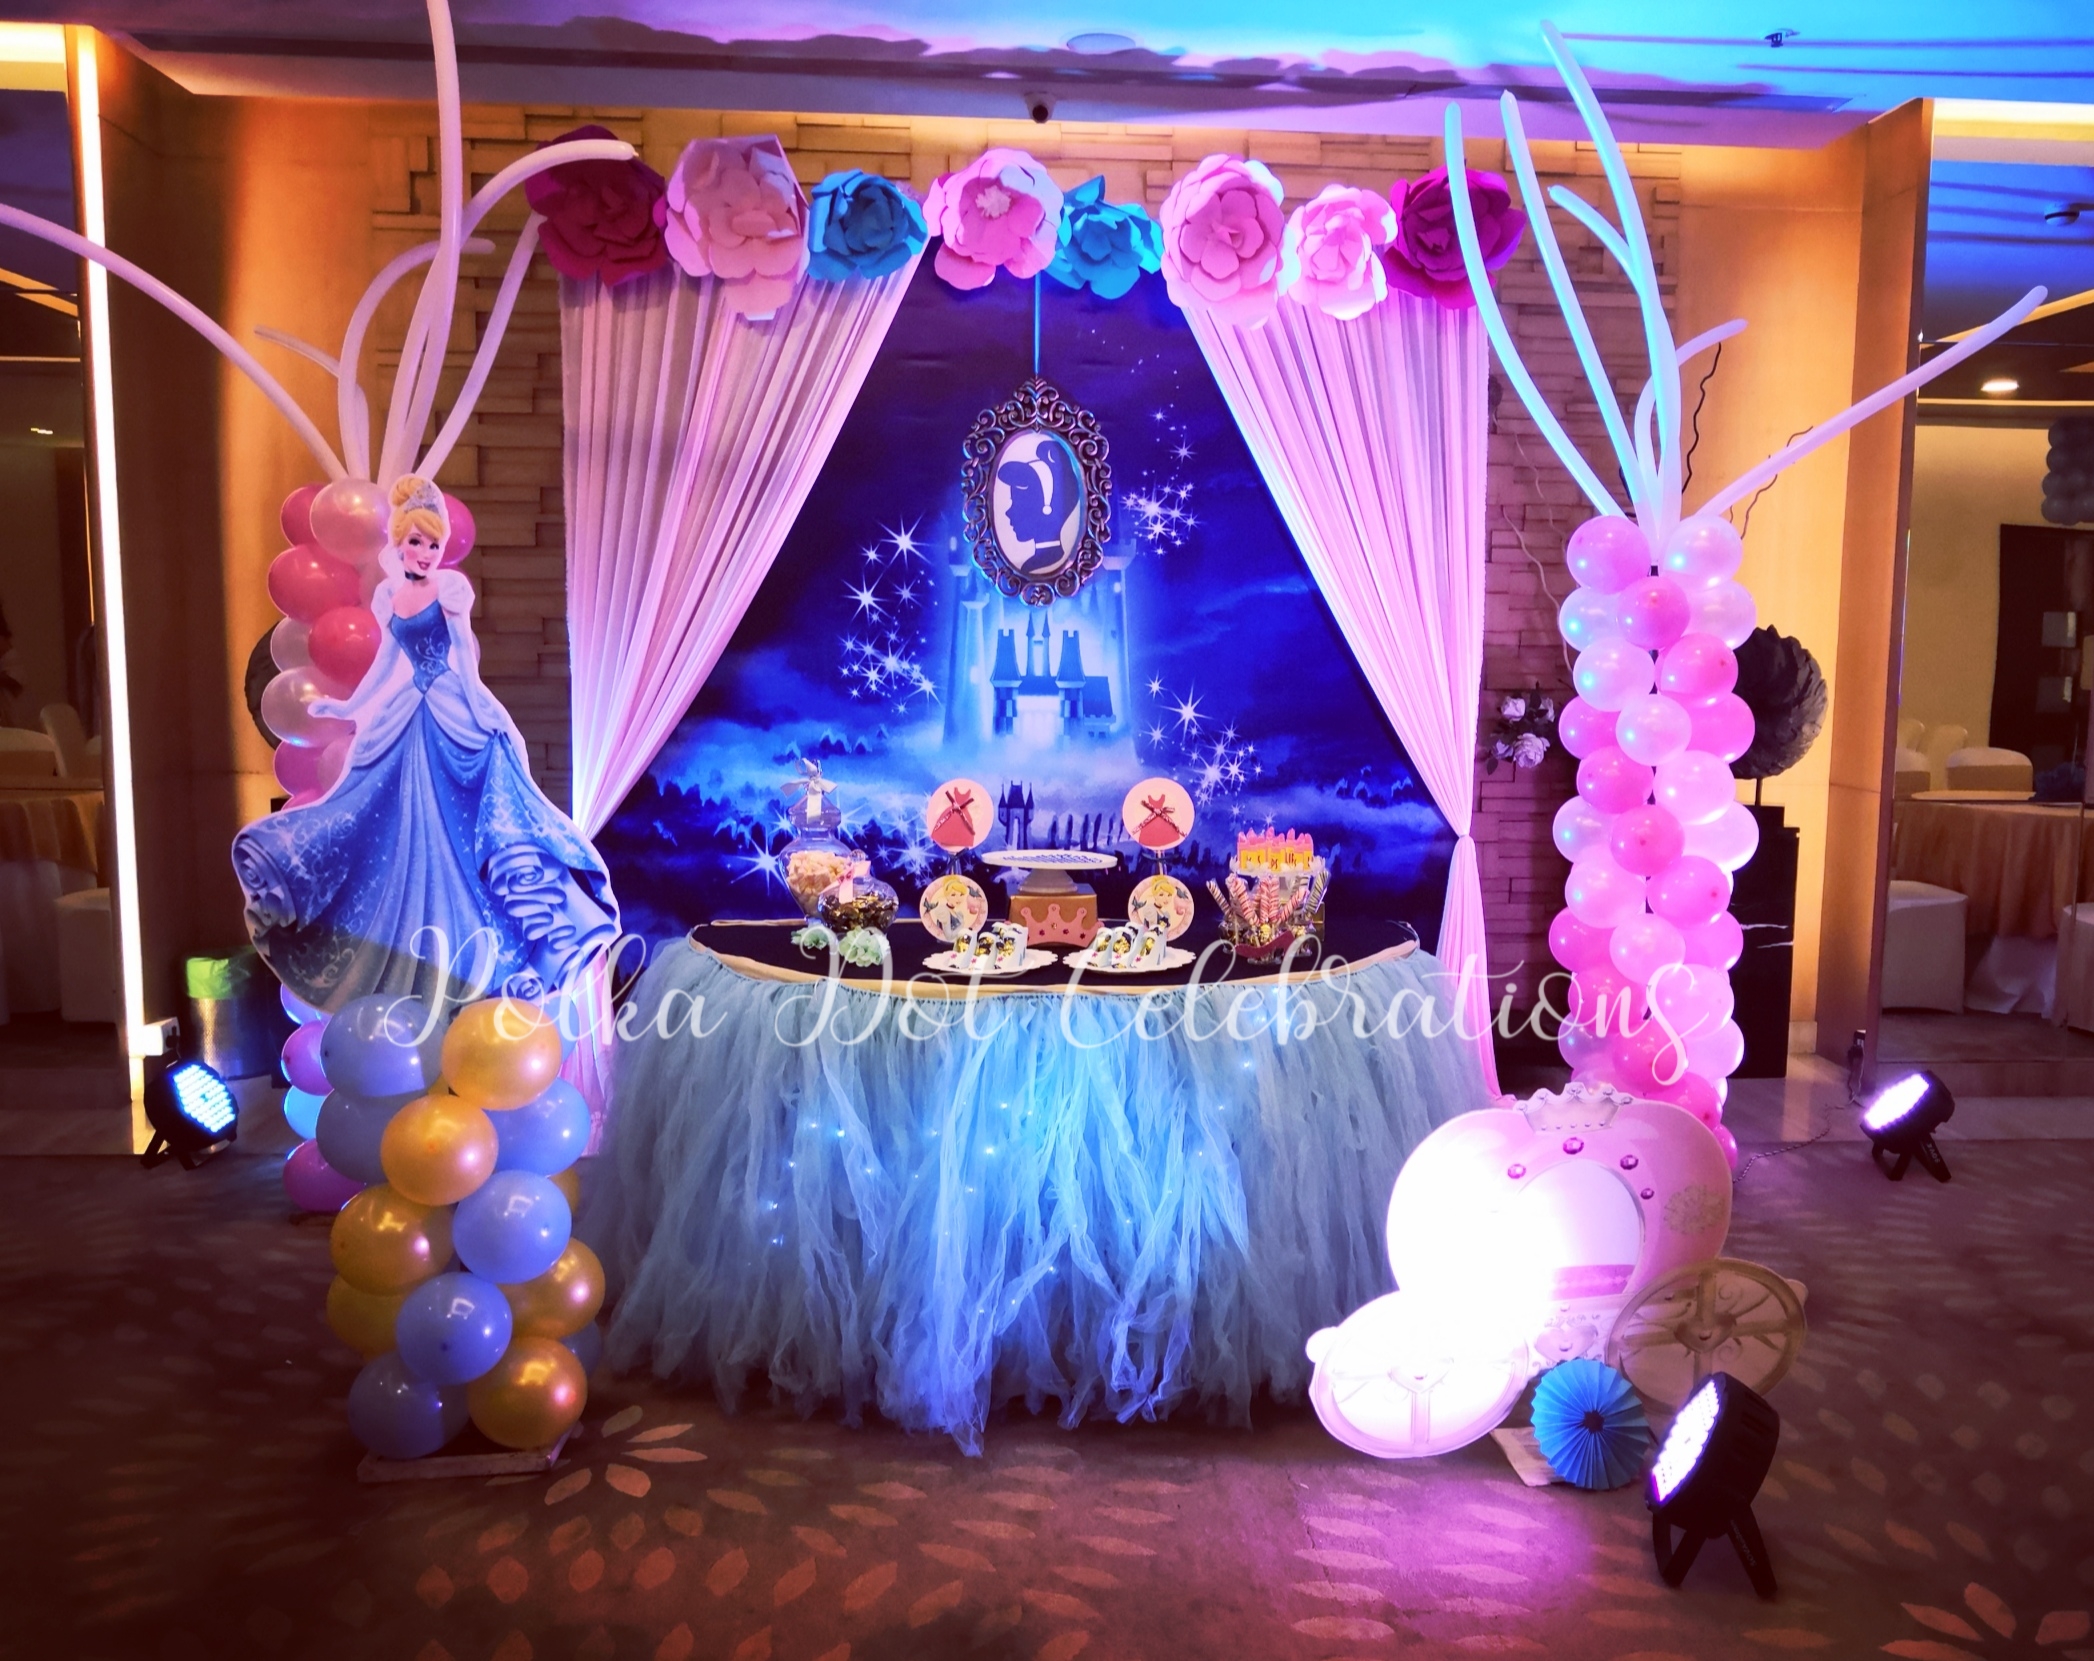 Cinderella themed decorations